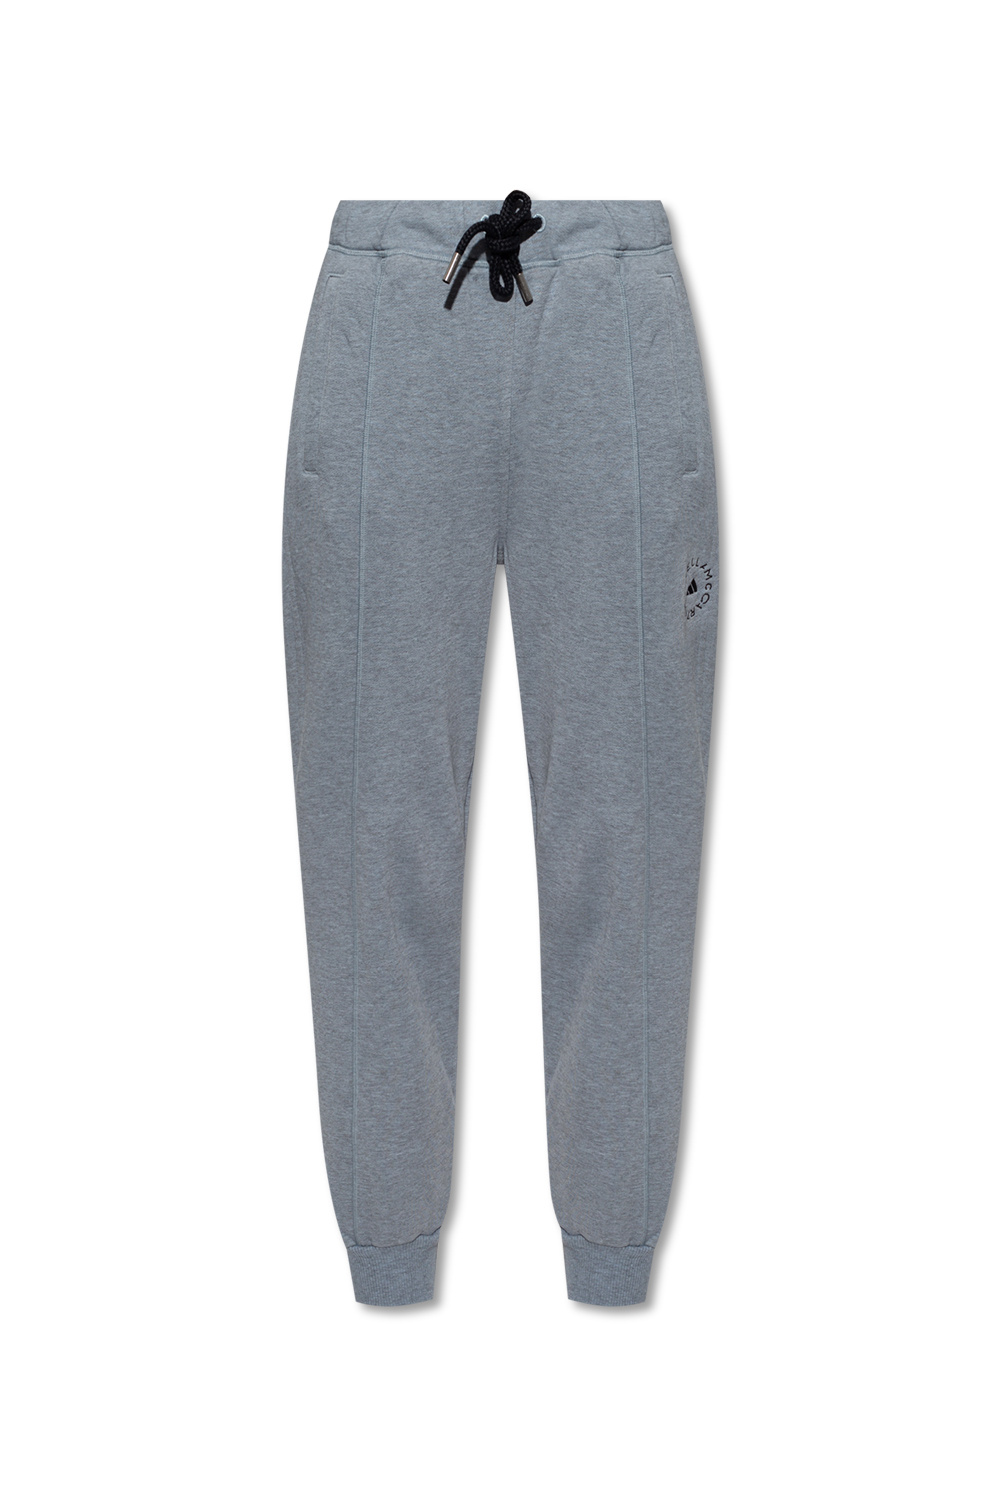 Grey Sweatpants with logo ADIDAS by Stella McCartney - Vitkac Canada